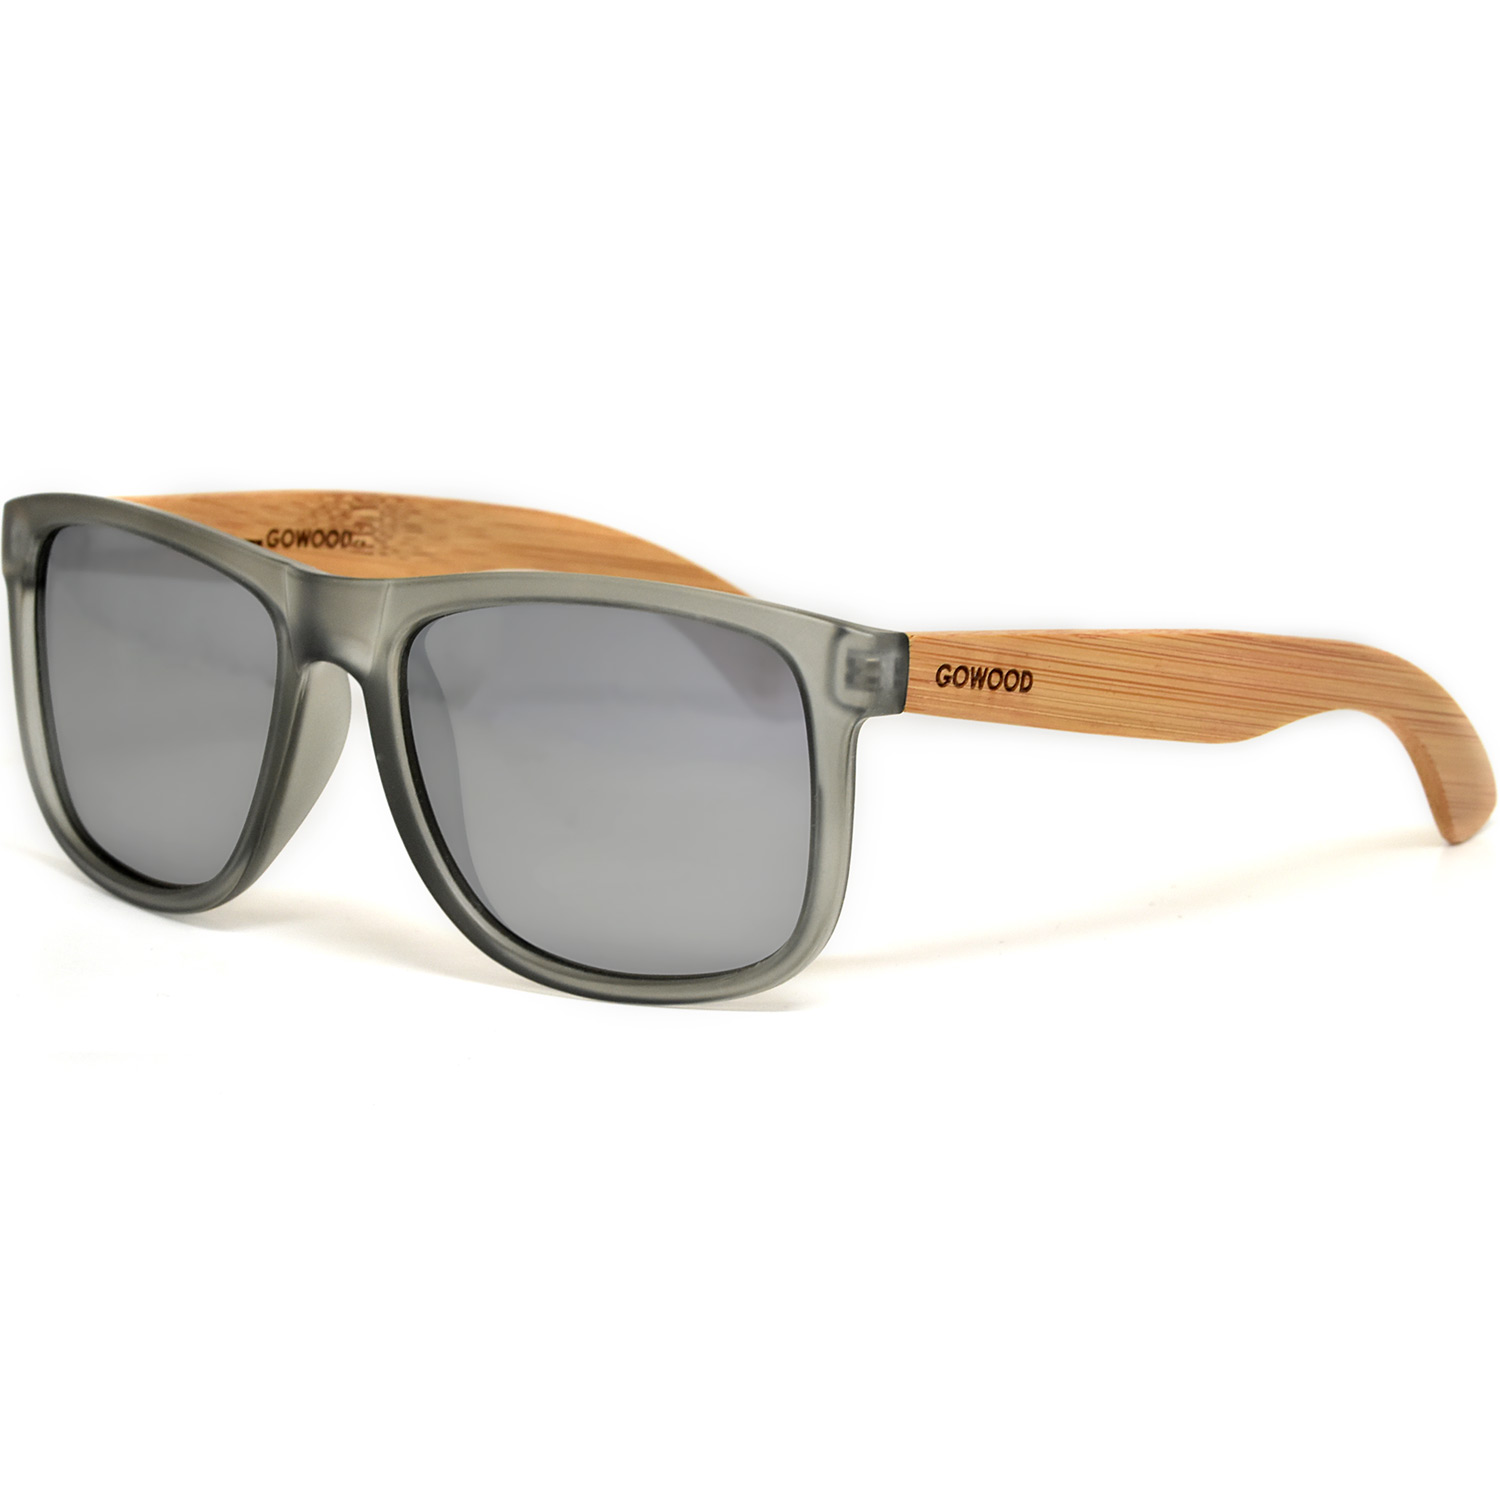 Square bamboo wood sunglasses silver mirrored polarized lenses